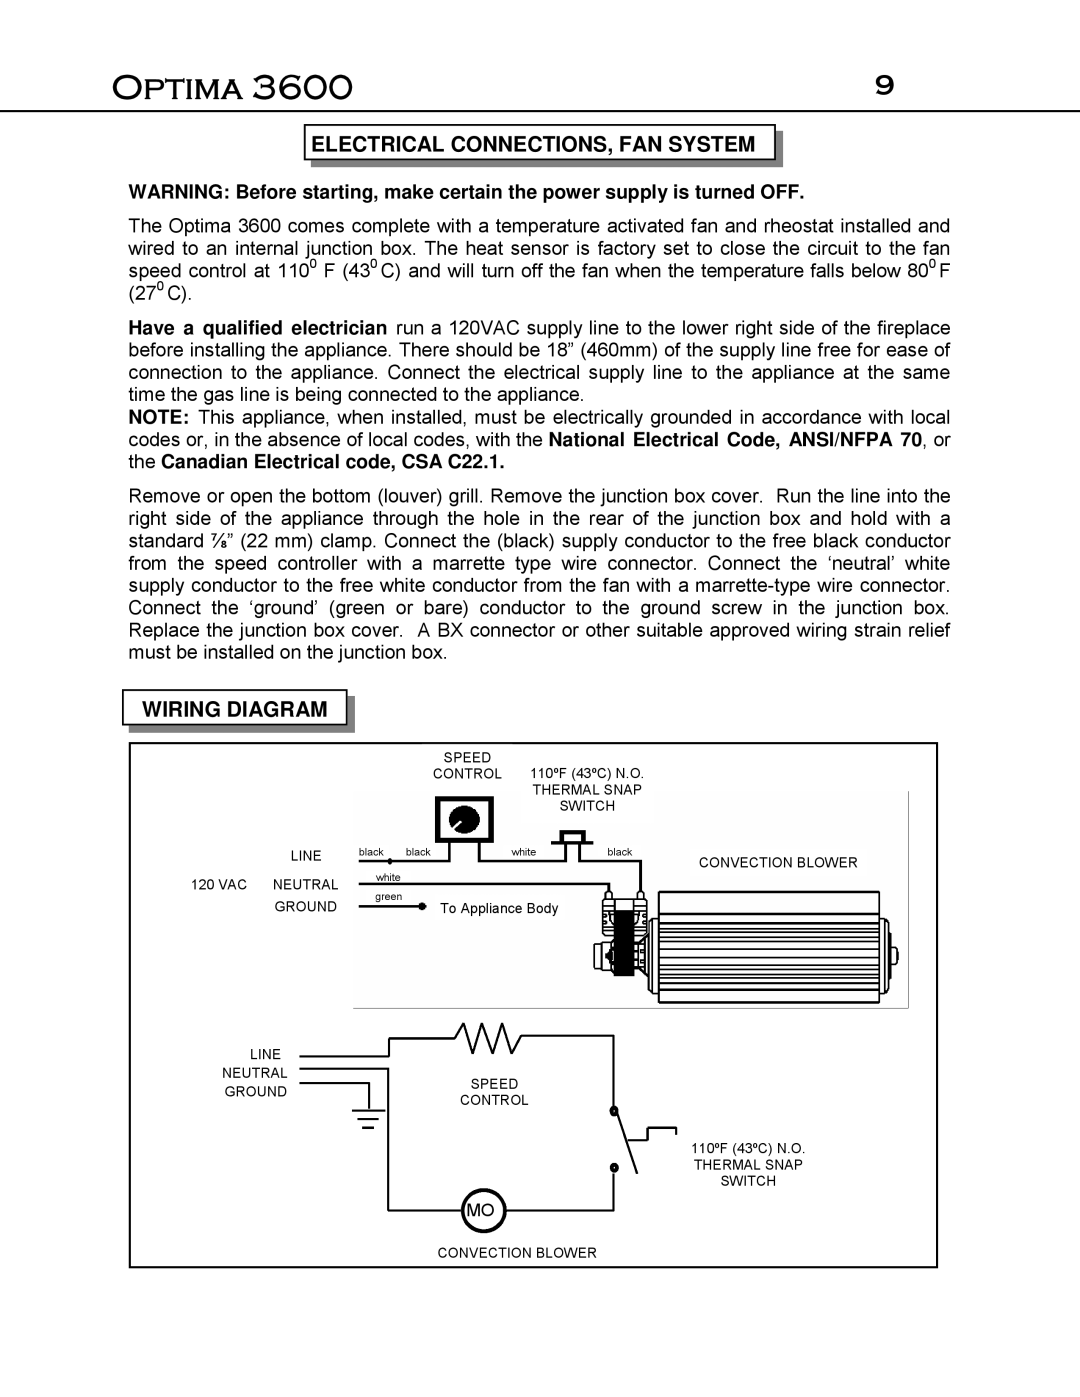 Optima Company Optima 3600O manual Electrical Connections, Fan System, Wiring Diagram, blackwhiteblack green 